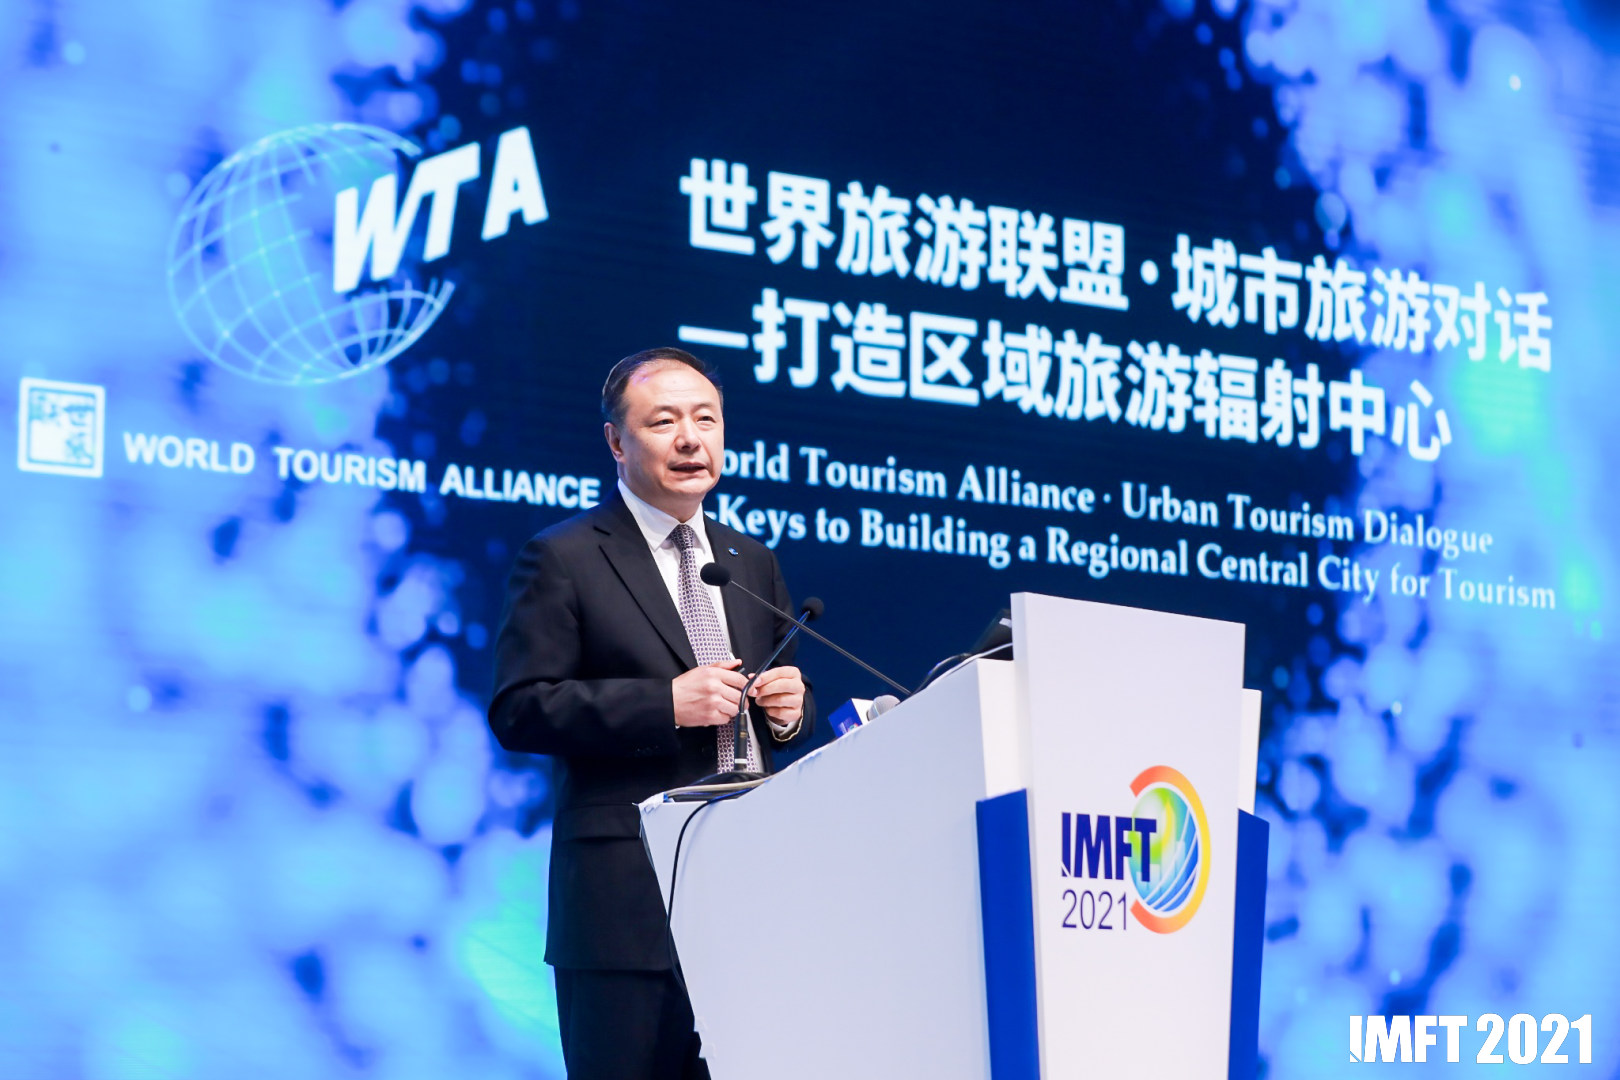 LIU Shijun, Secretary-General of the World Tourism Alliance